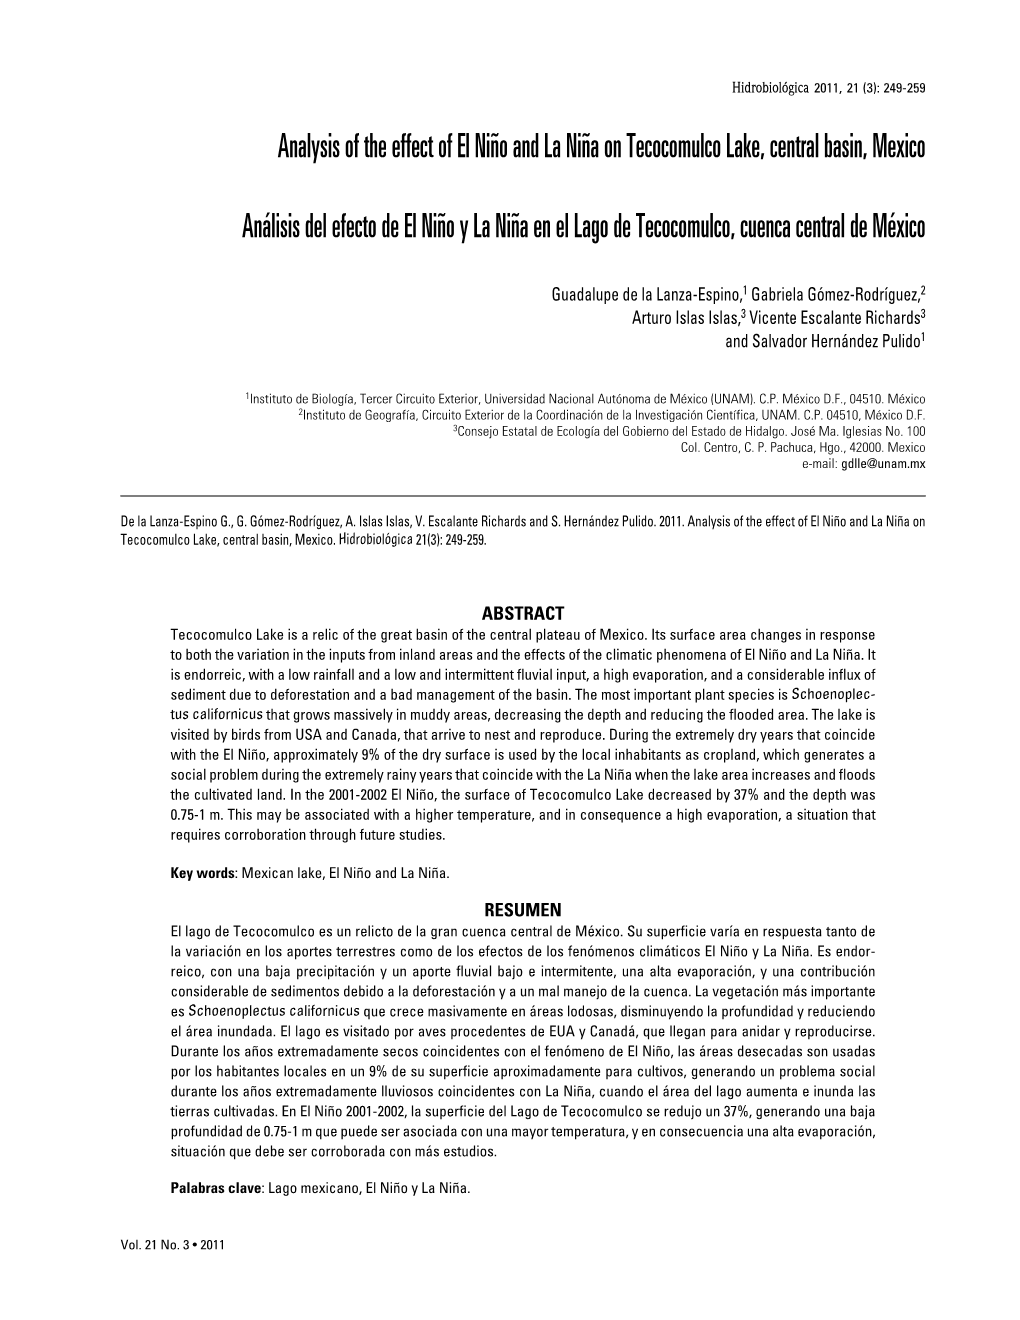 Analysis of the Effect of El Niño and La Niña on Tecocomulco Lake, Central Basin, Mexico